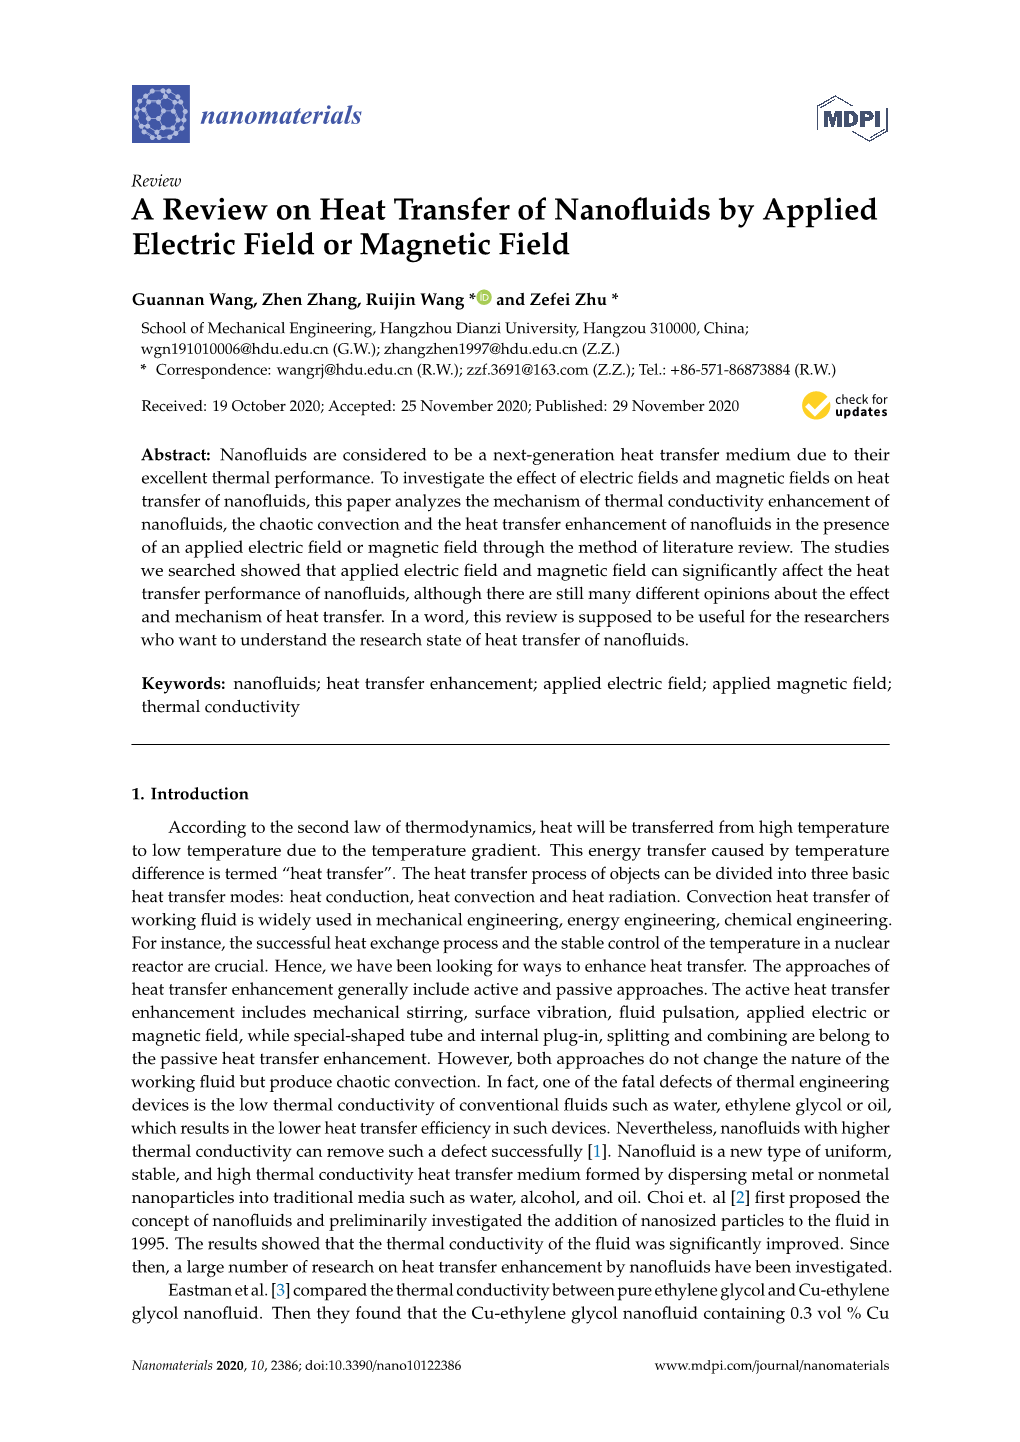 A Review on Heat Transfer of Nanofluids by Applied Electric Field